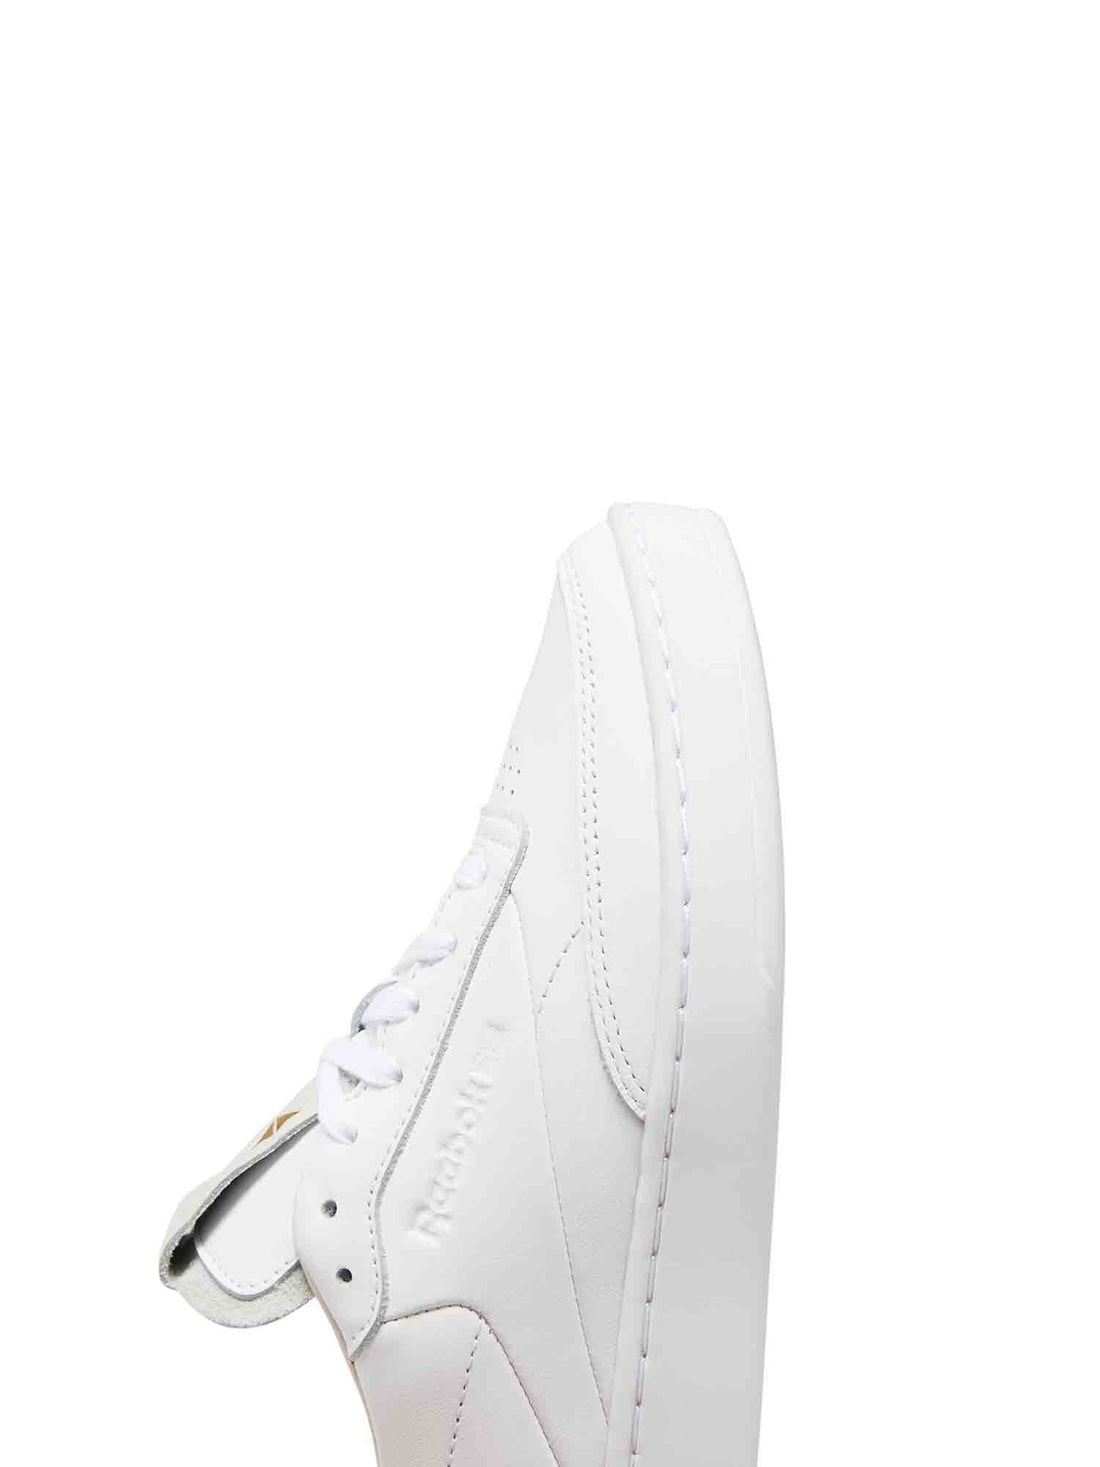 Sneakers Bianco Reebok